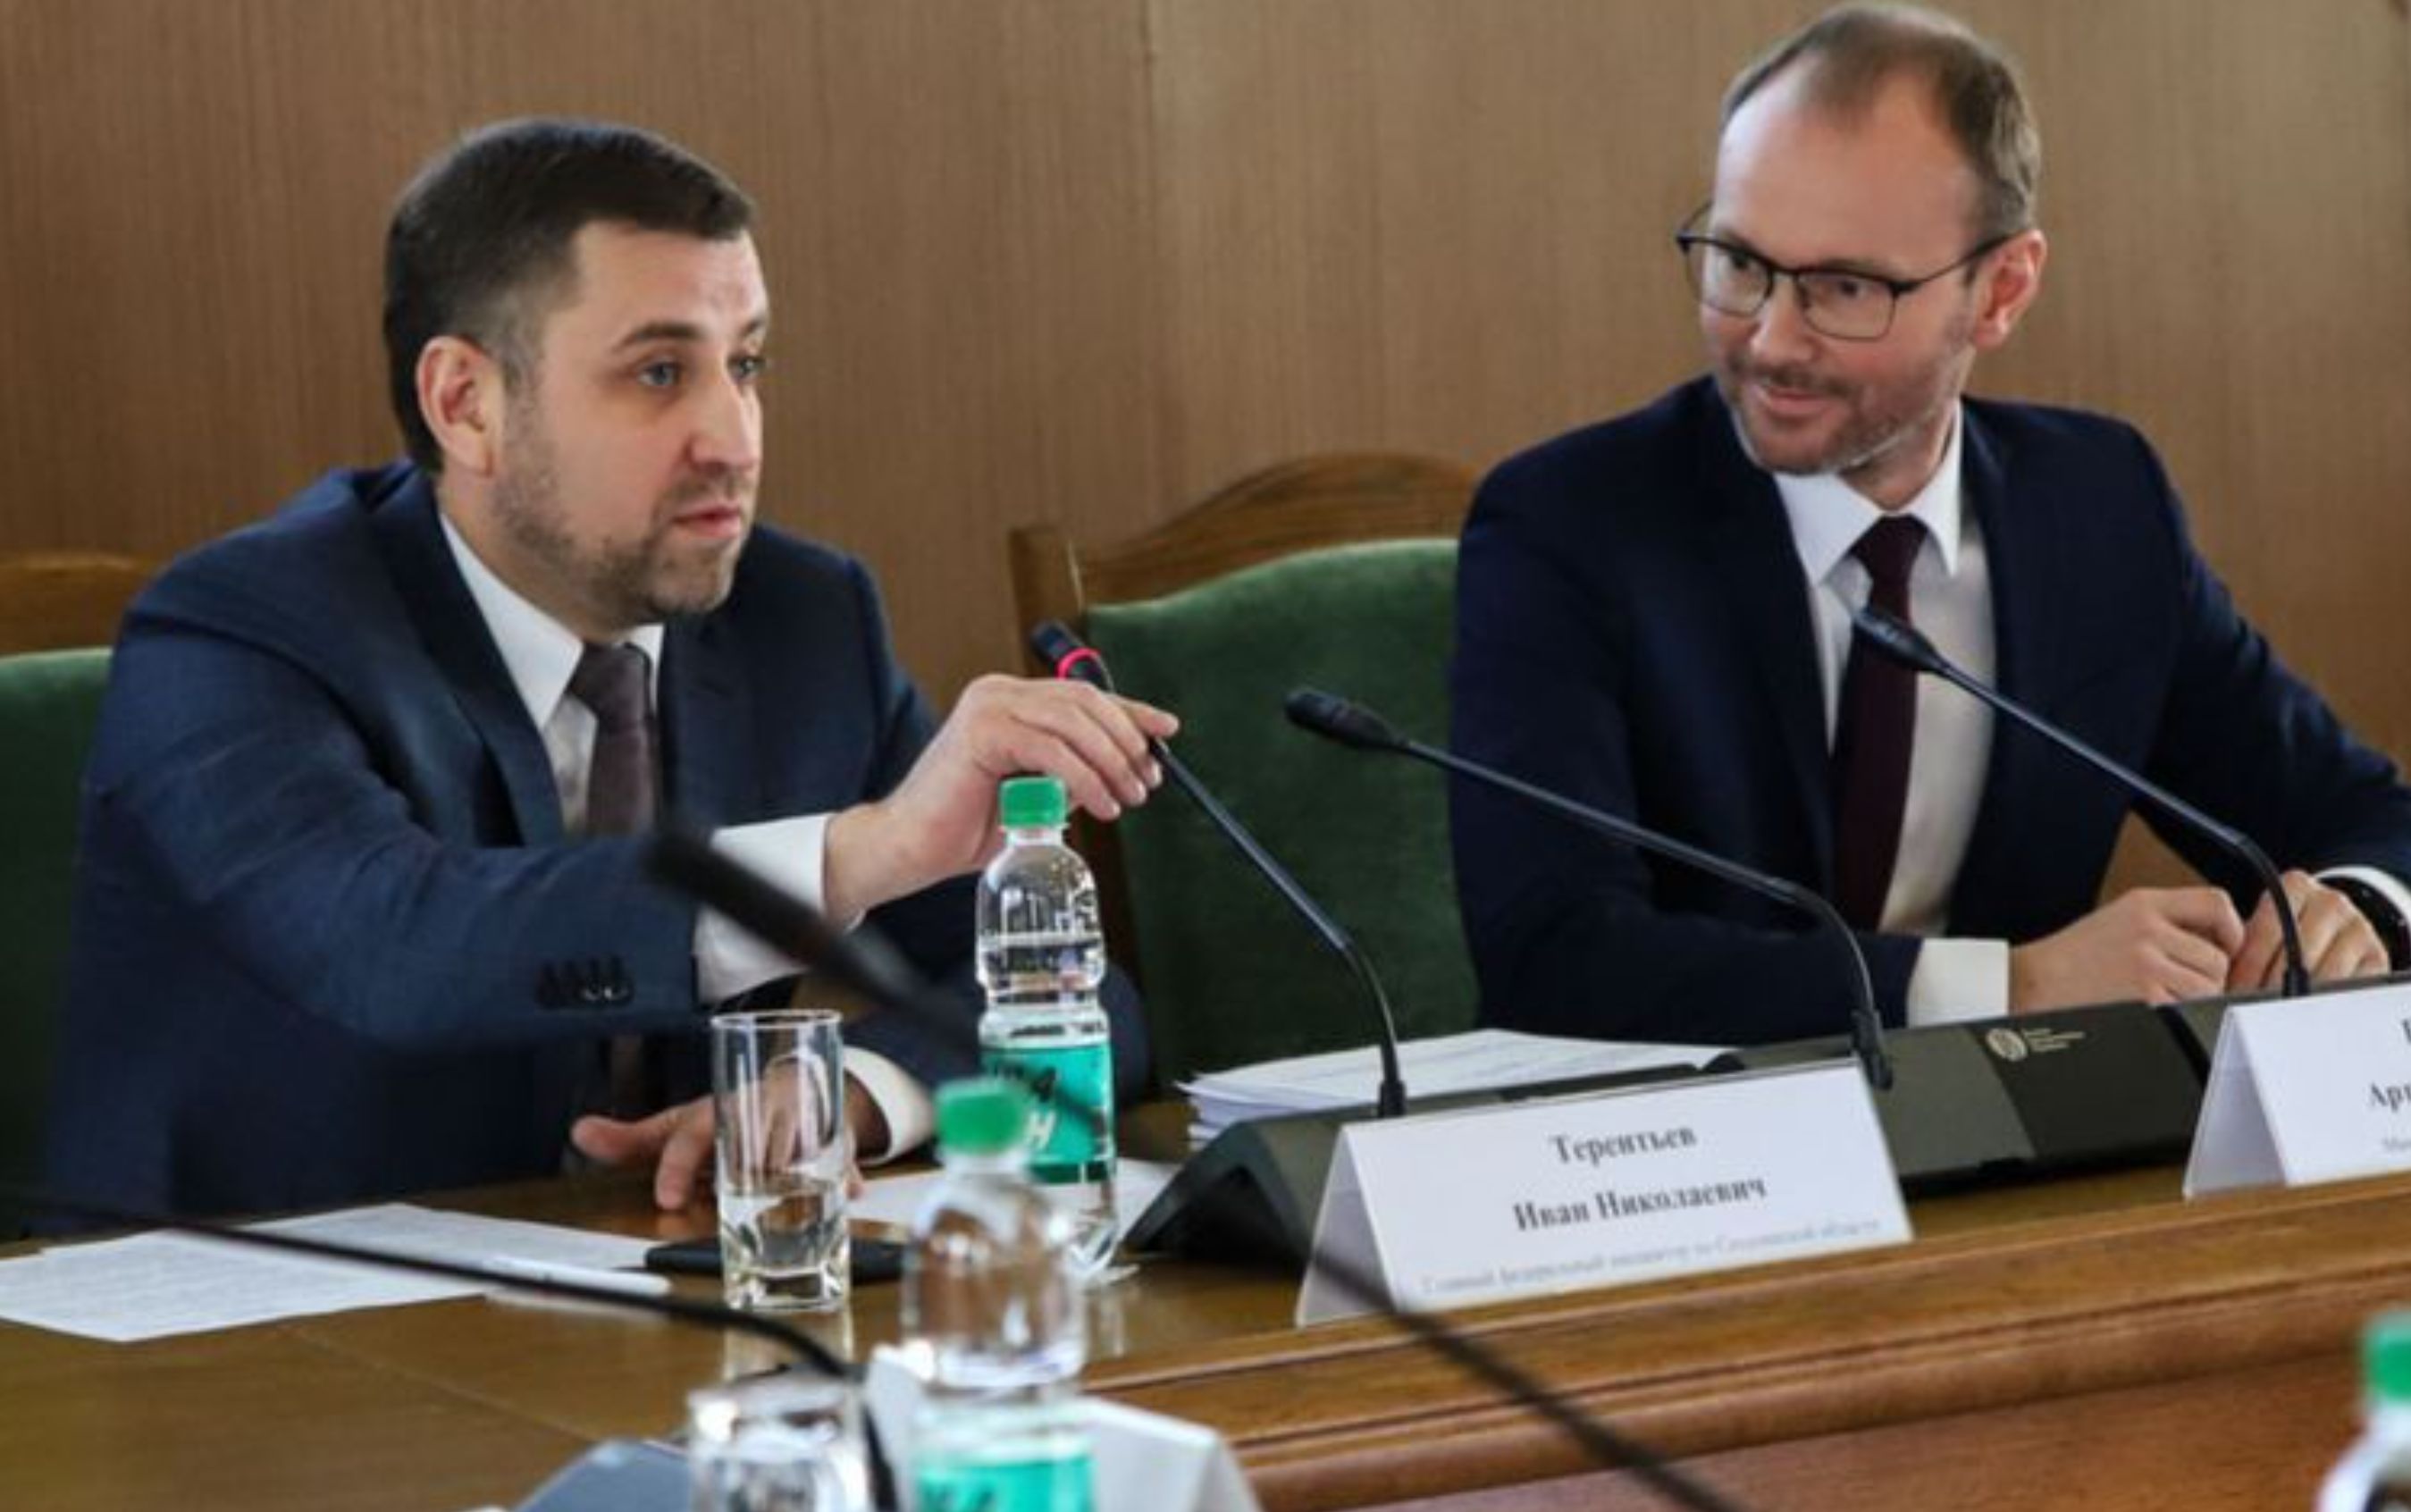 Ivan Terentiev, left, speaks at a public event in Yuzhno-Sakhalinsk in 2022. Official event photo.